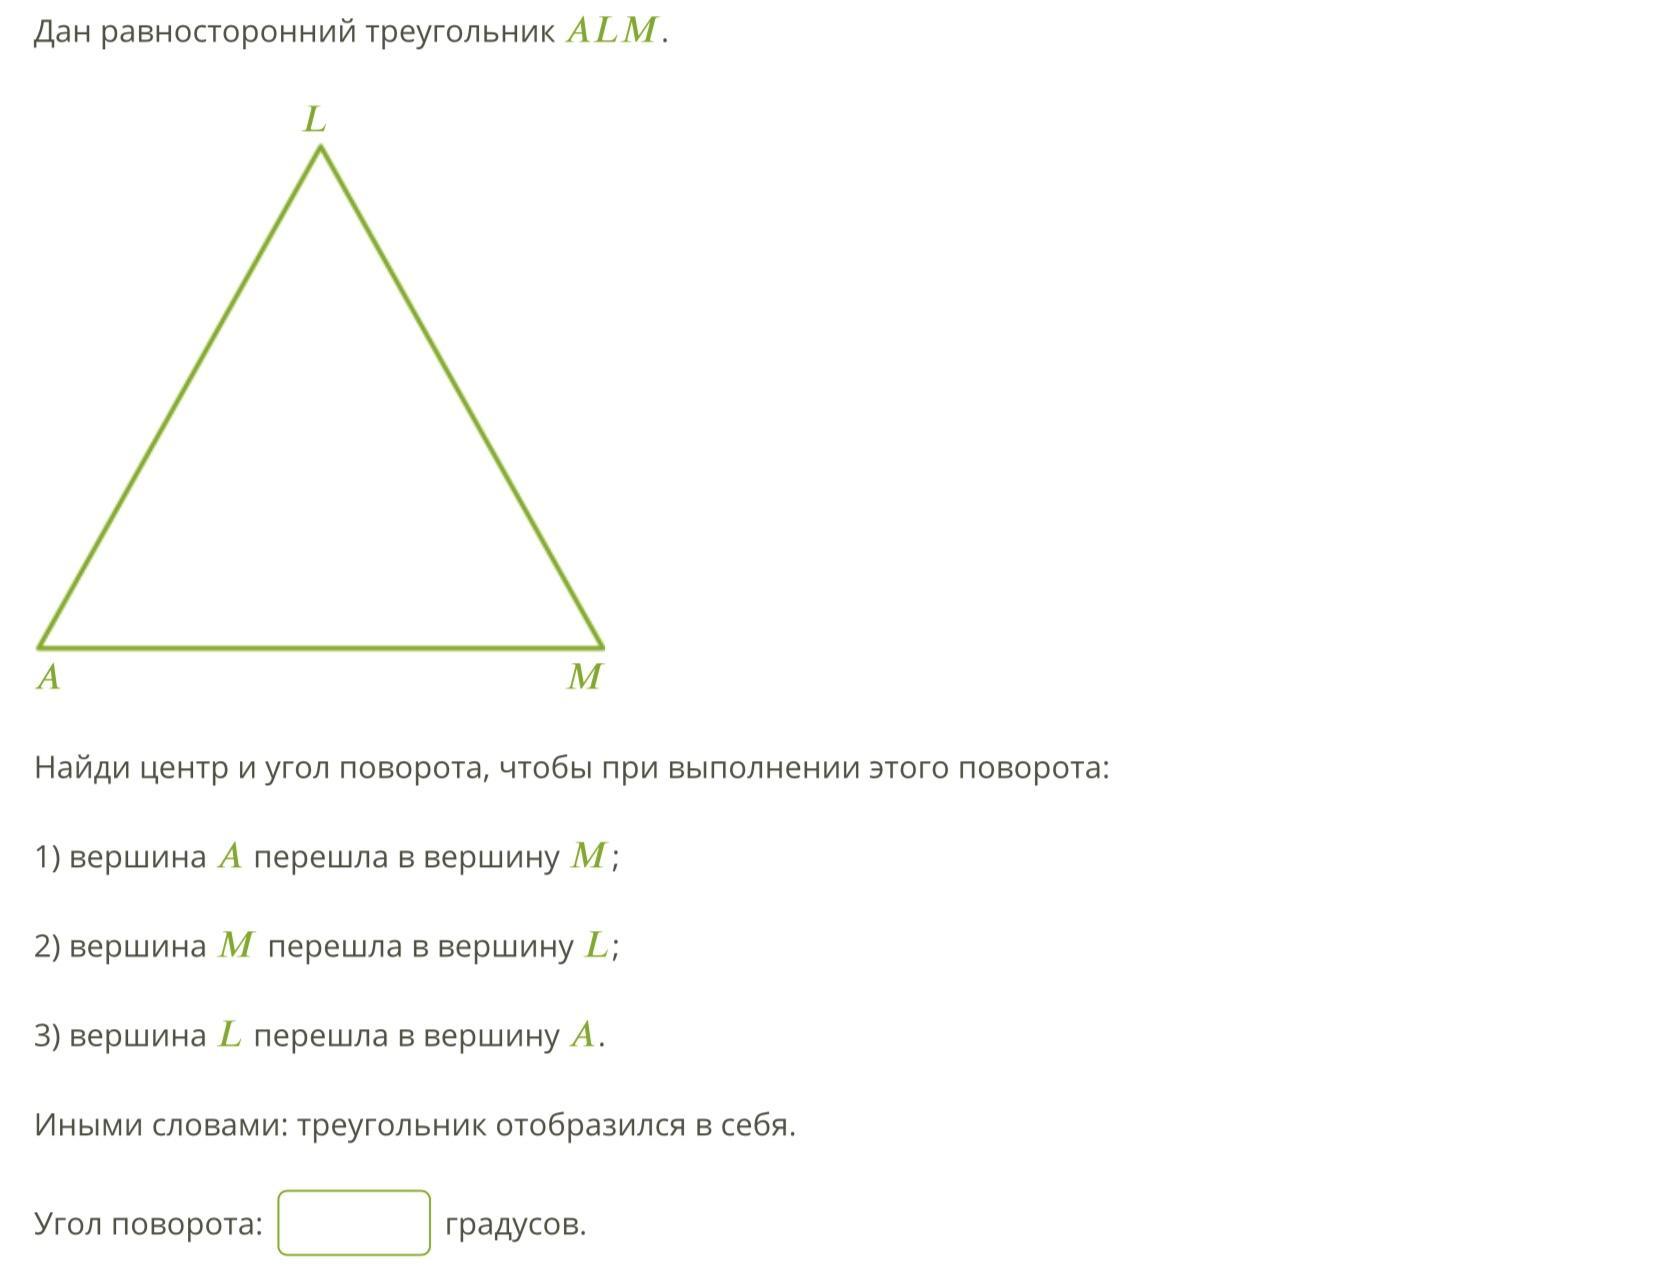 Чему равна сумма равностороннего треугольника. Вершины равностороннего треугольника. Равносторонний треугольник в равностороннем треугольнике. Центр равностороннего треугольника. Углы равностороннего треугольника равны 60.